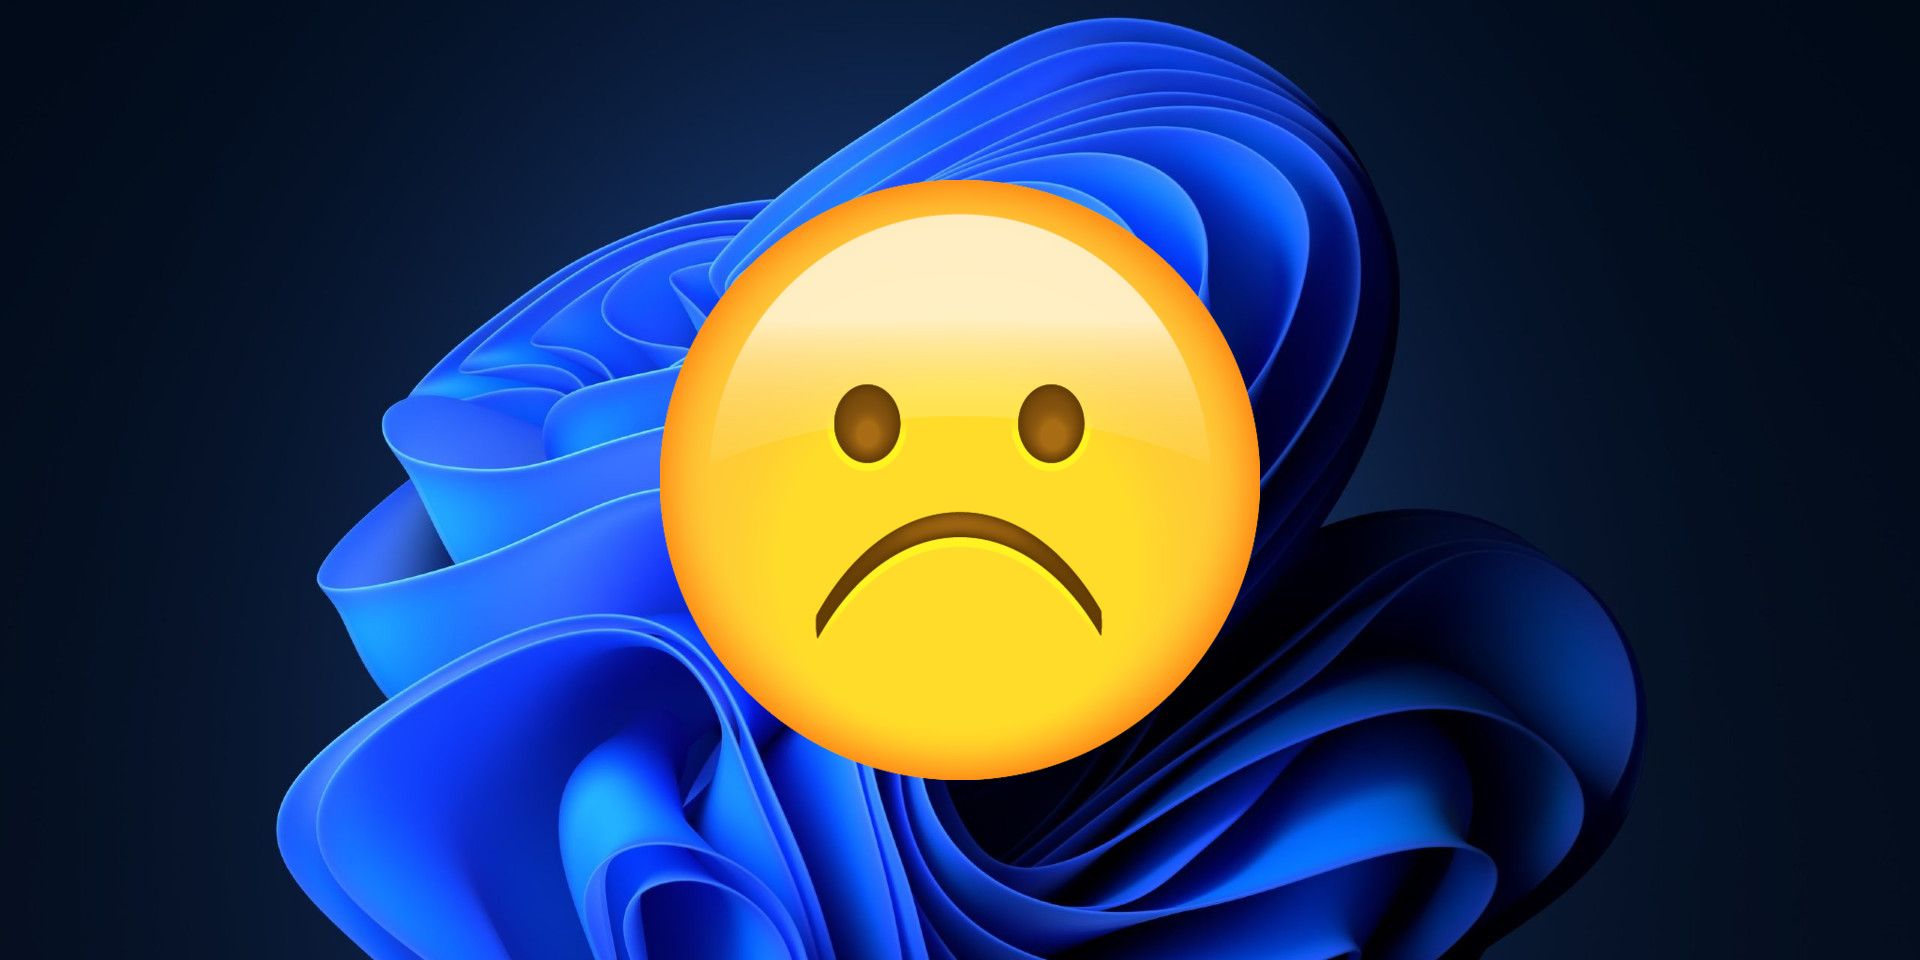 Windows 11 default blue ribbon wallpaper with yellow sad face emoji superimposed